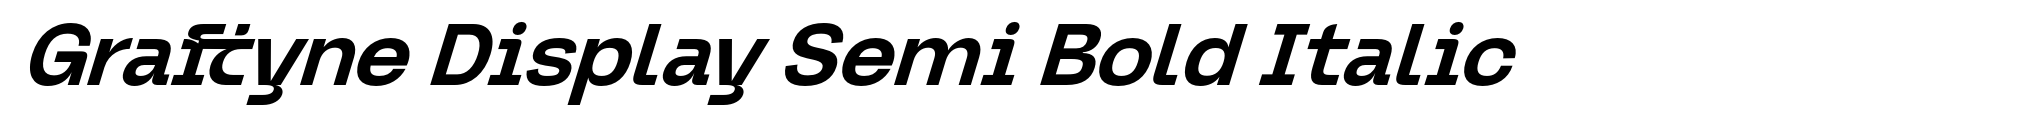 Graftyne Display Semi Bold Italic image